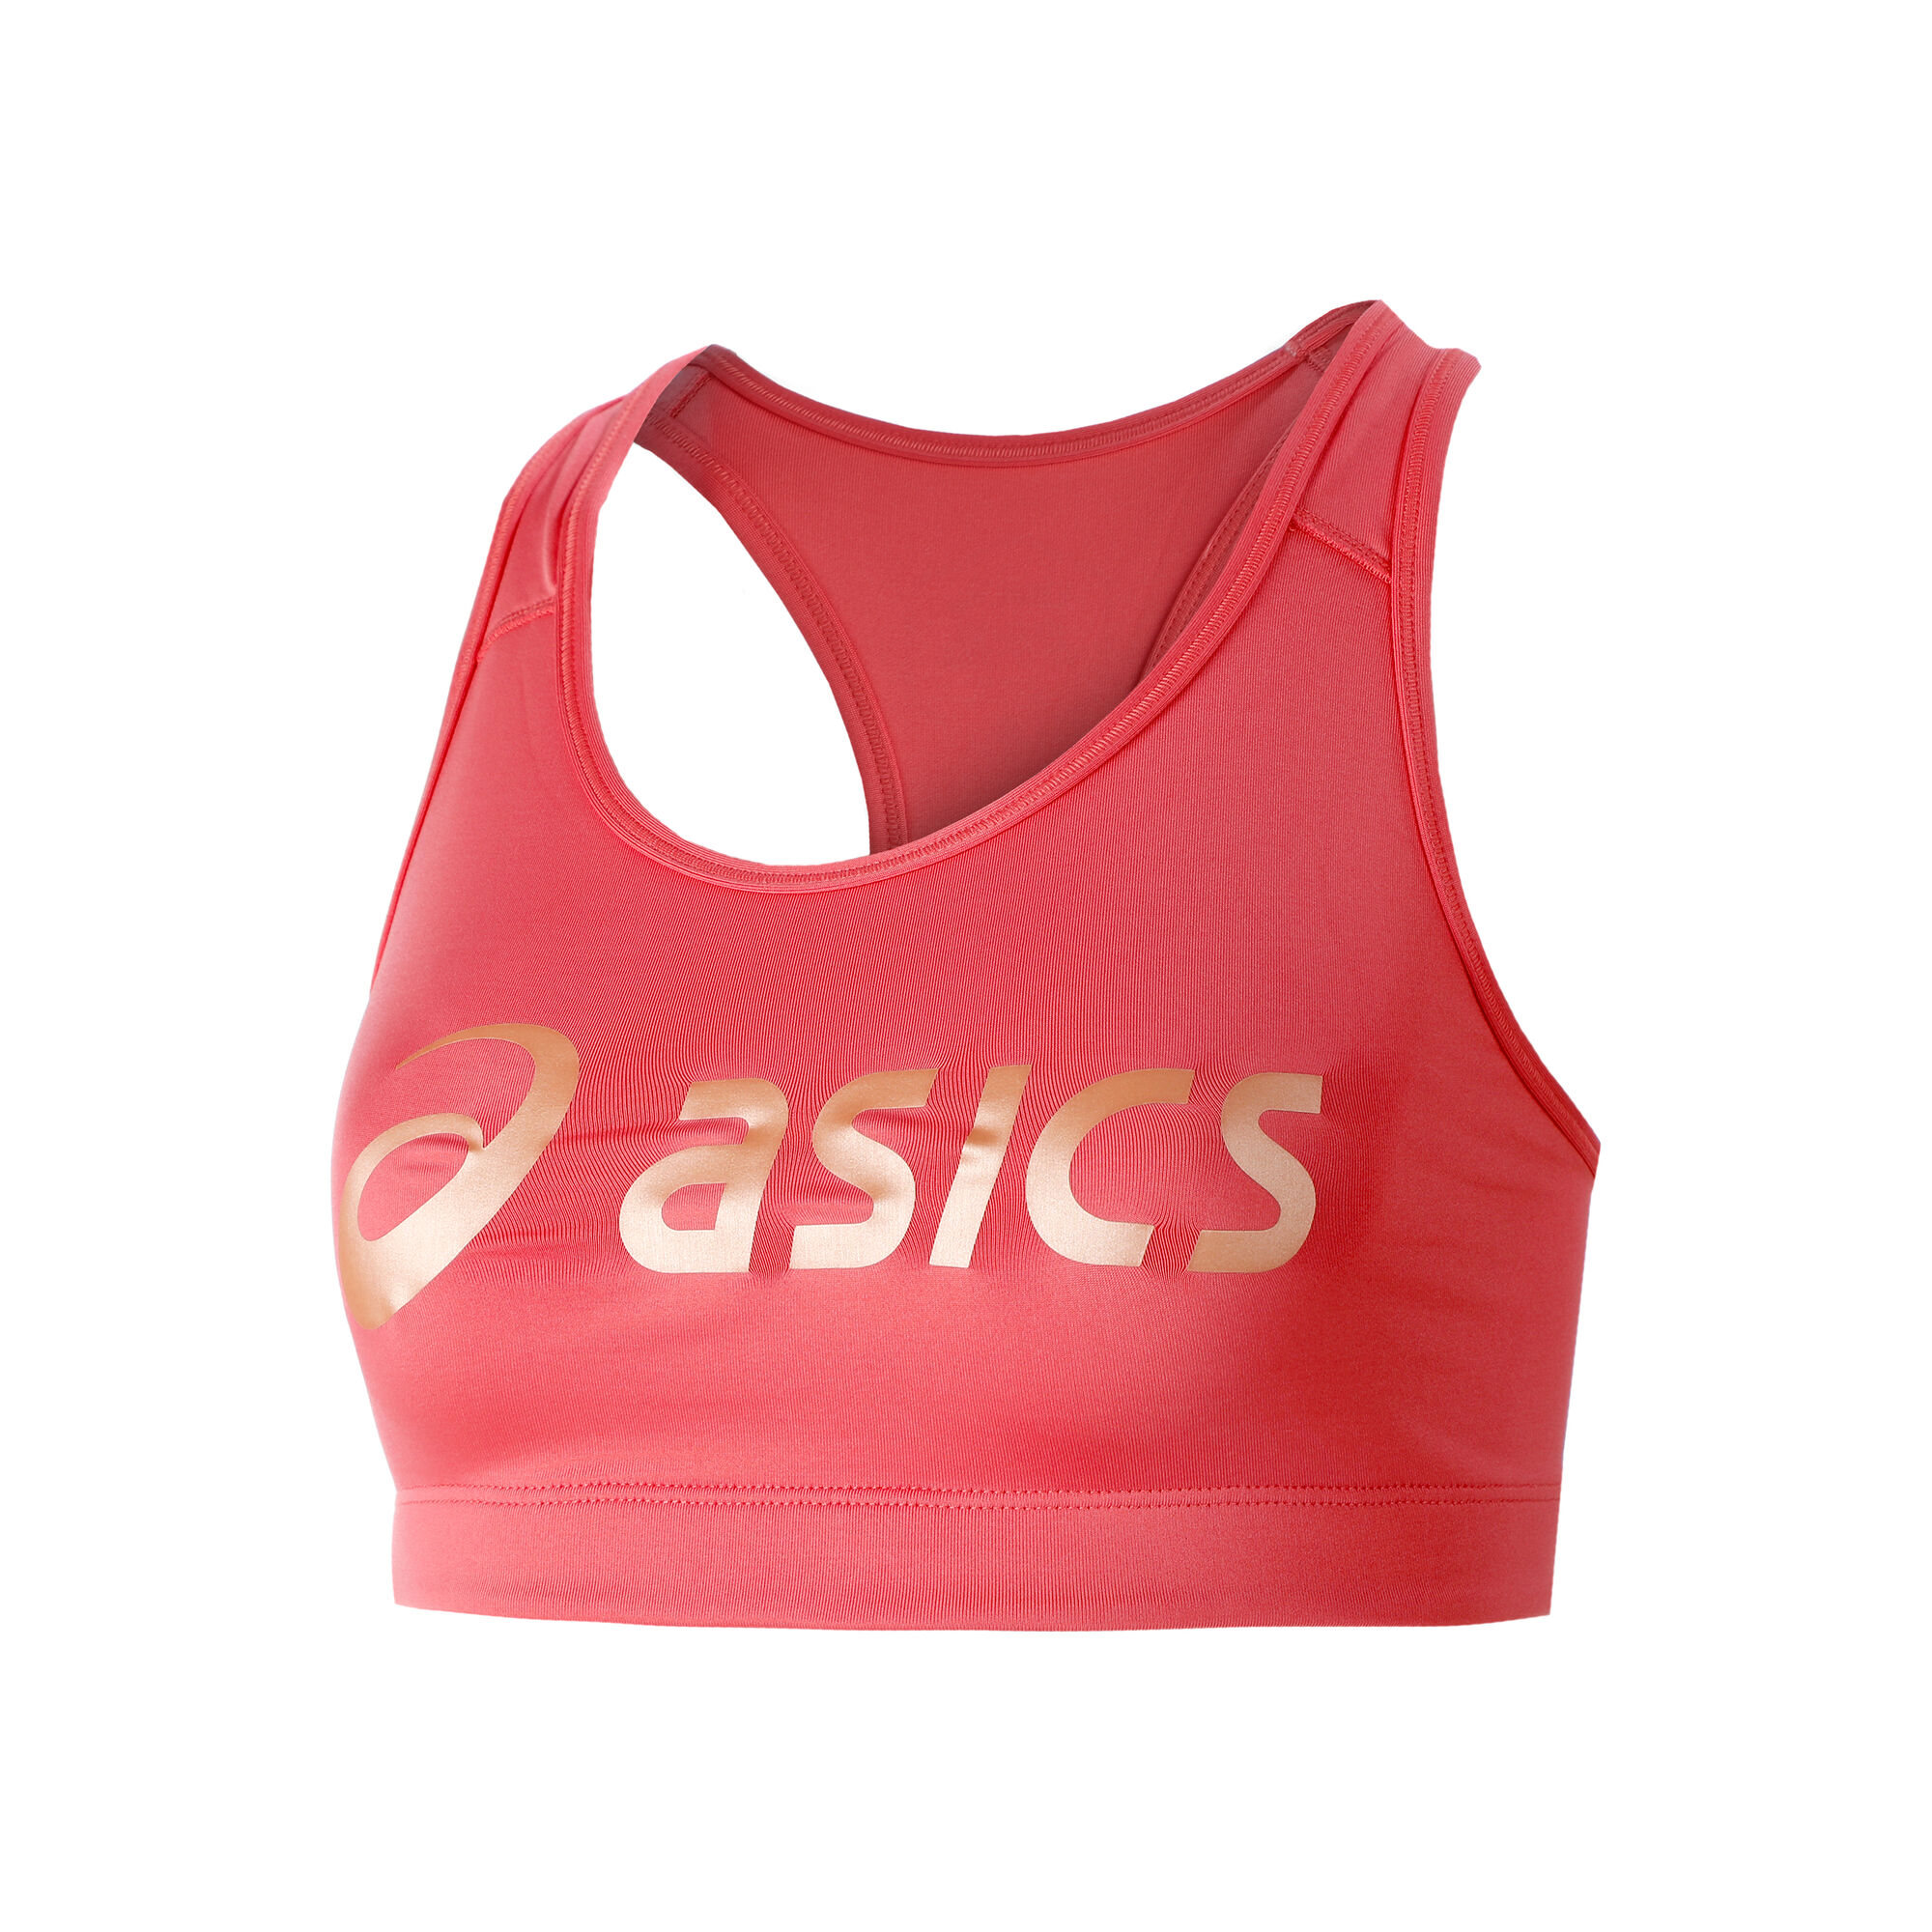 Asics Women's Sports Bras